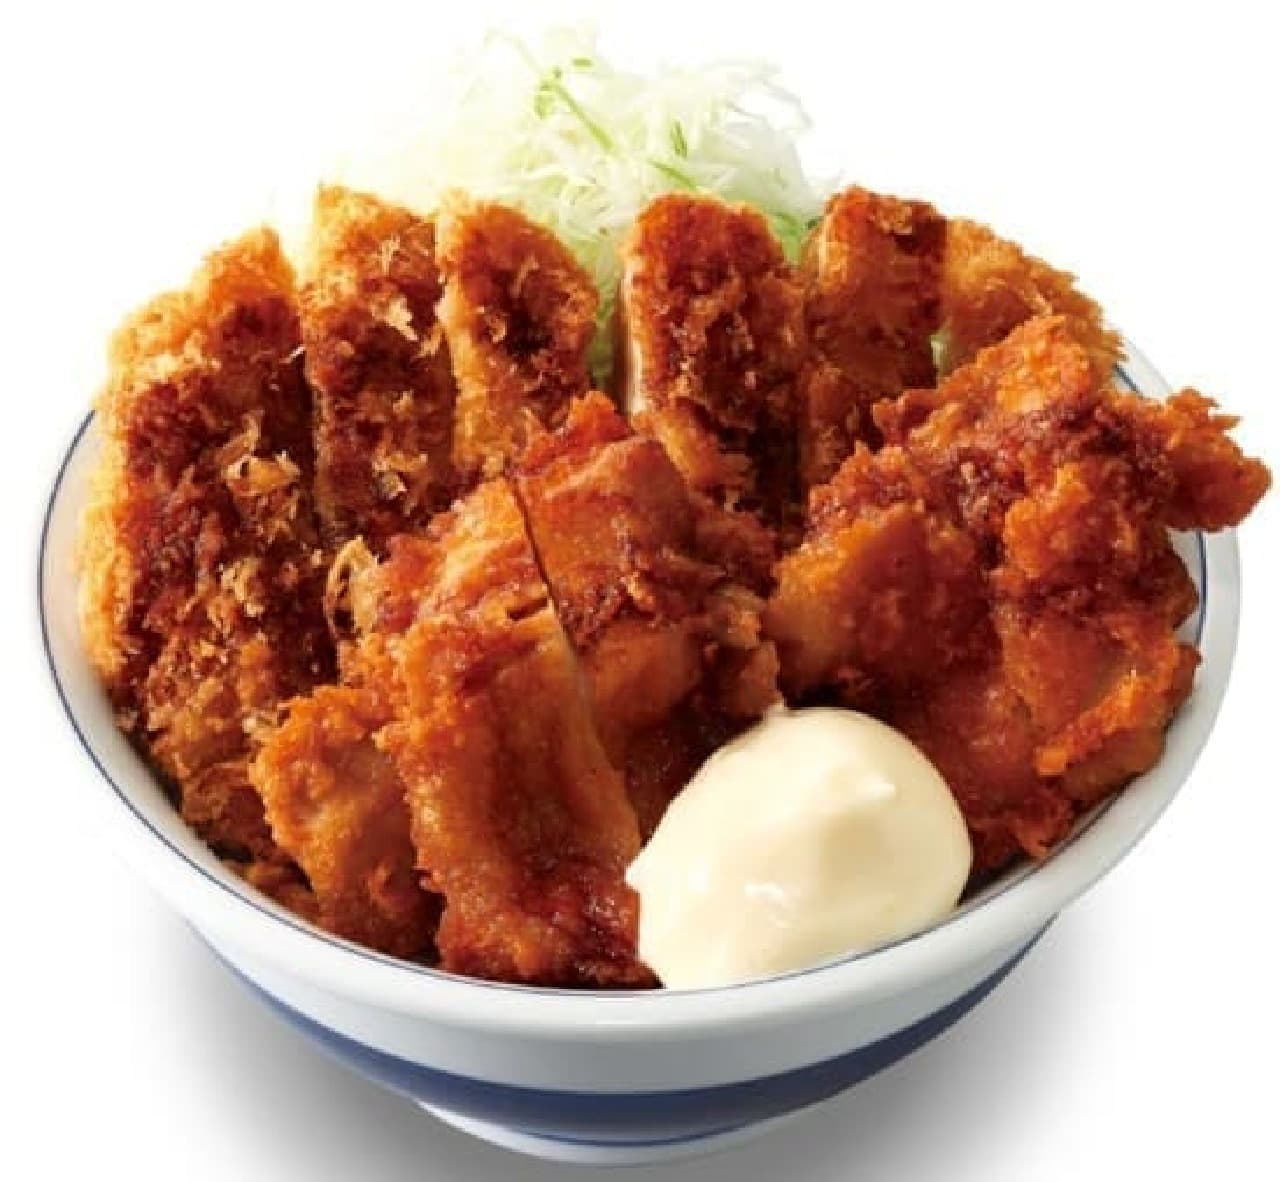 Katsuya "Chicken cutlet and fried chicken bowl"